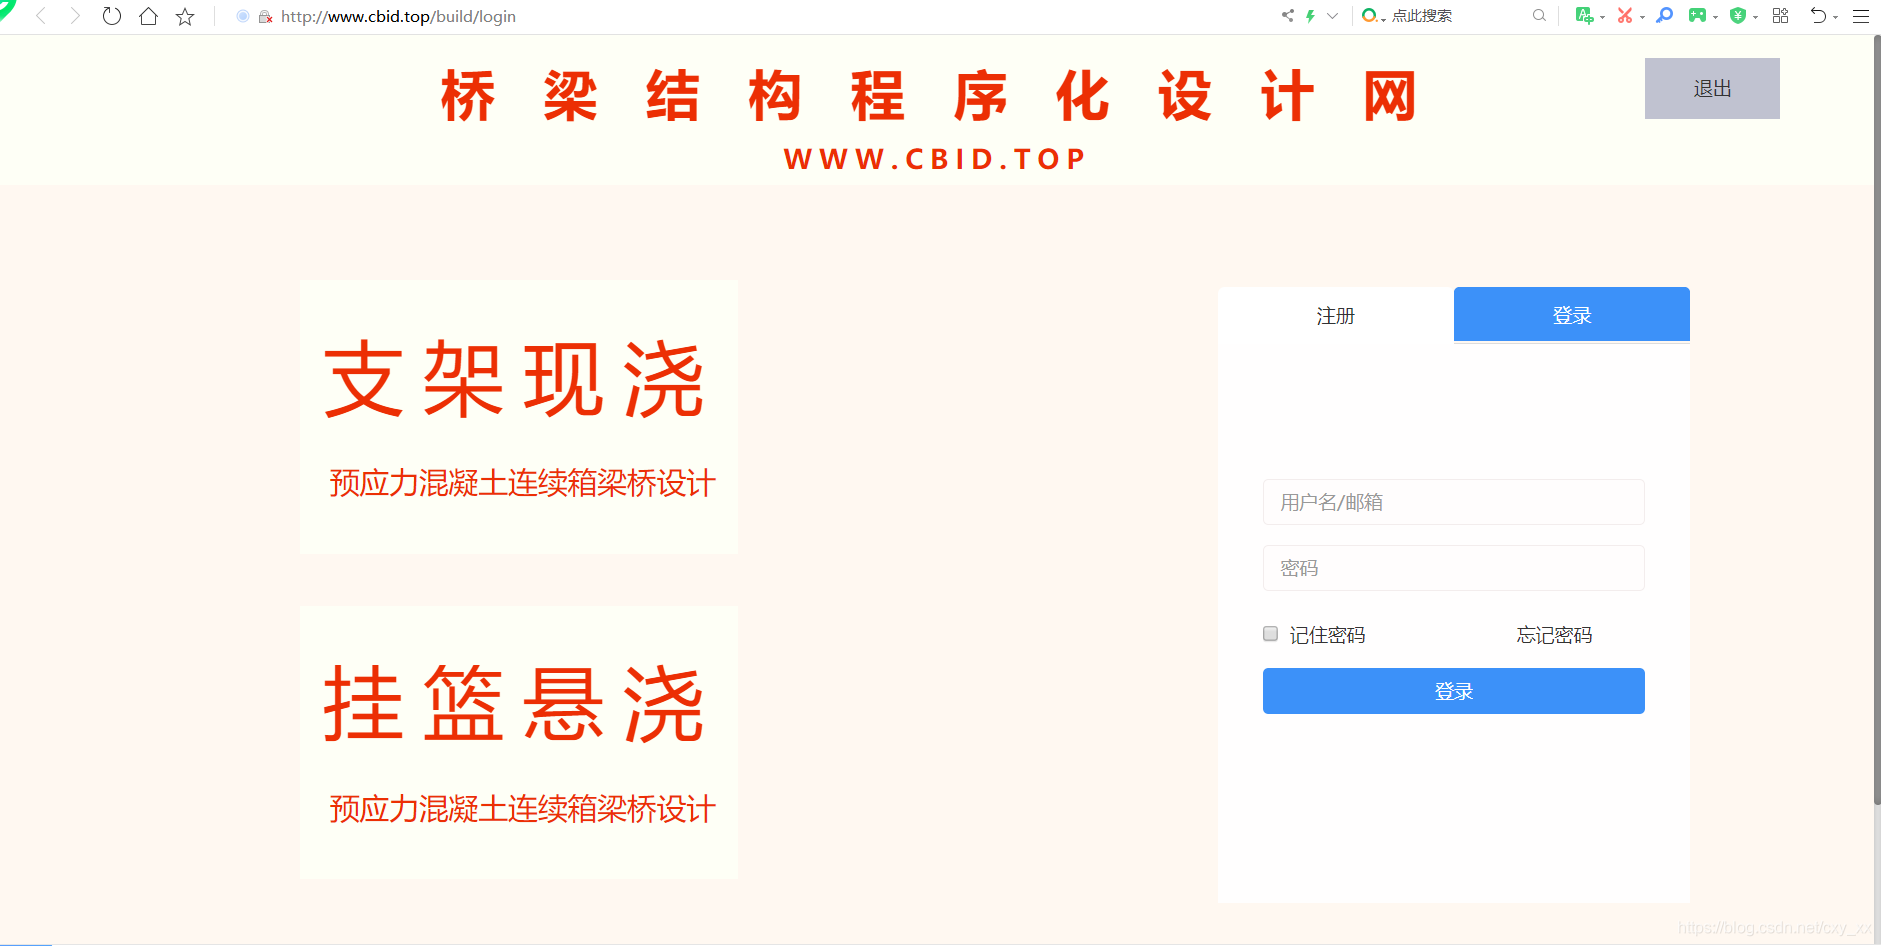 CBID网站